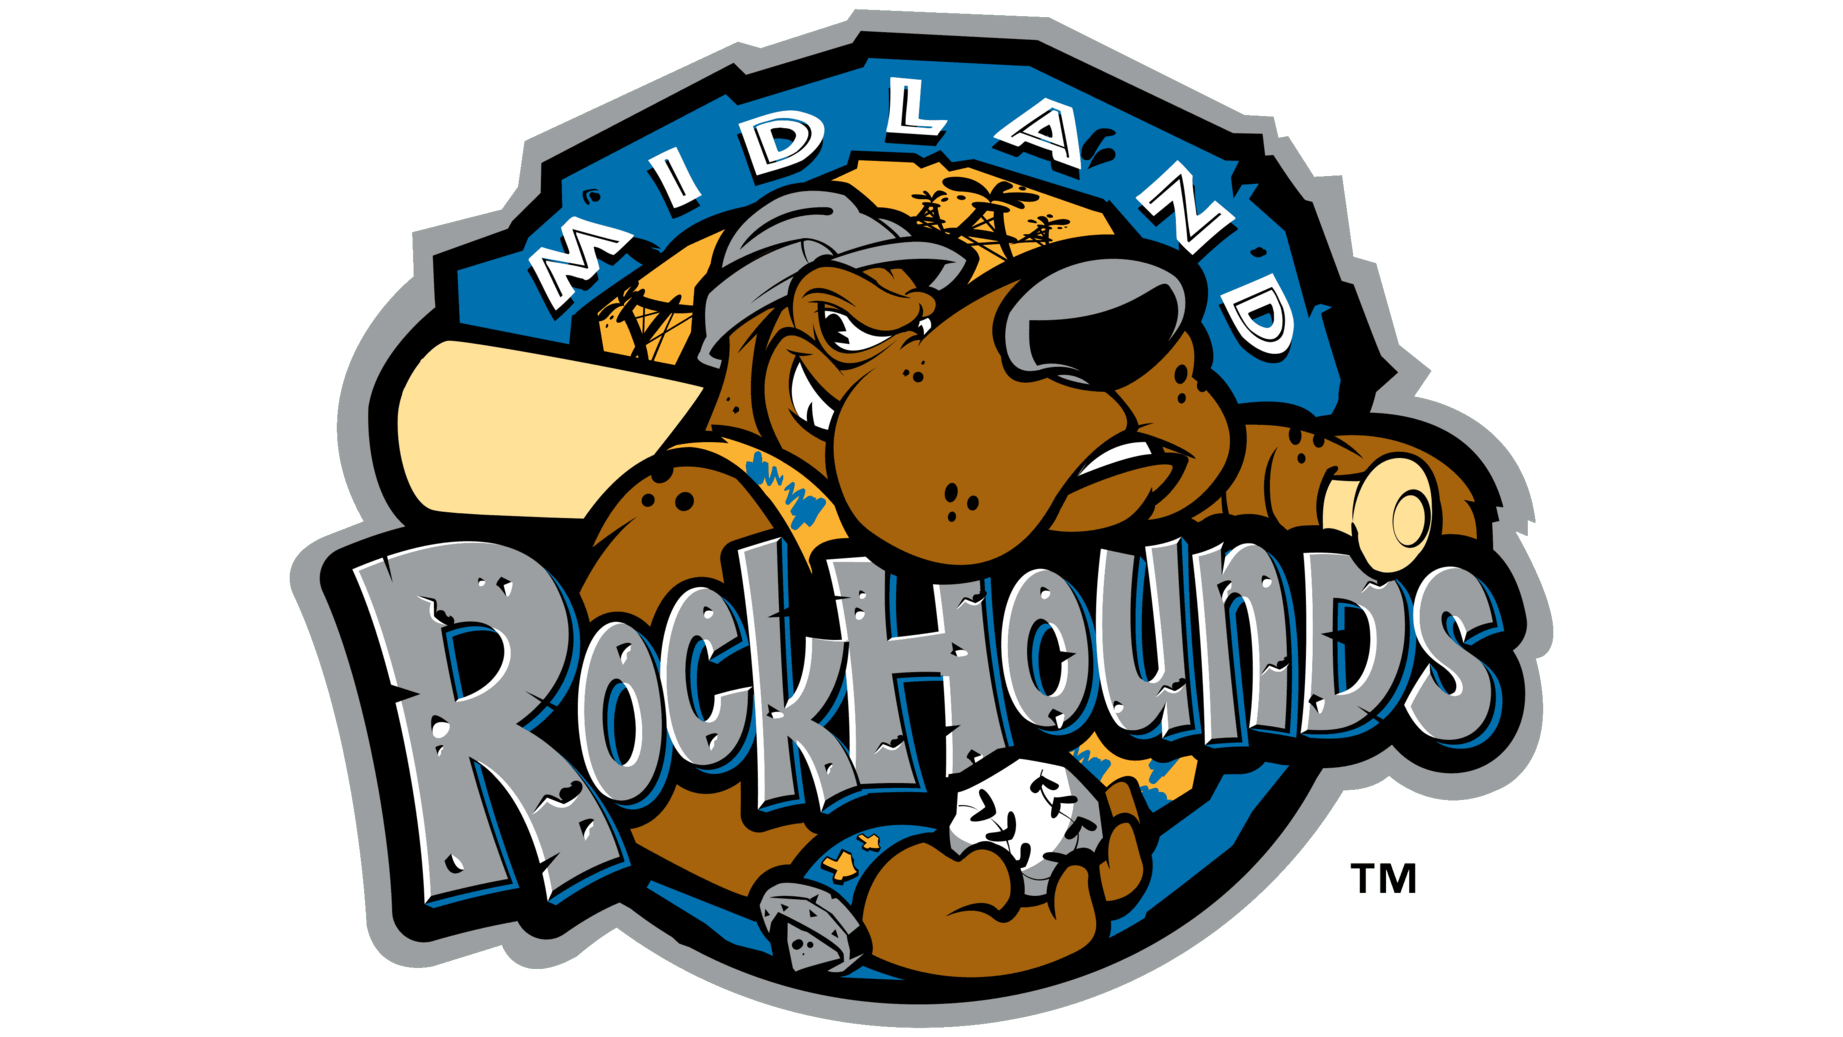 Midland rockhounds logo